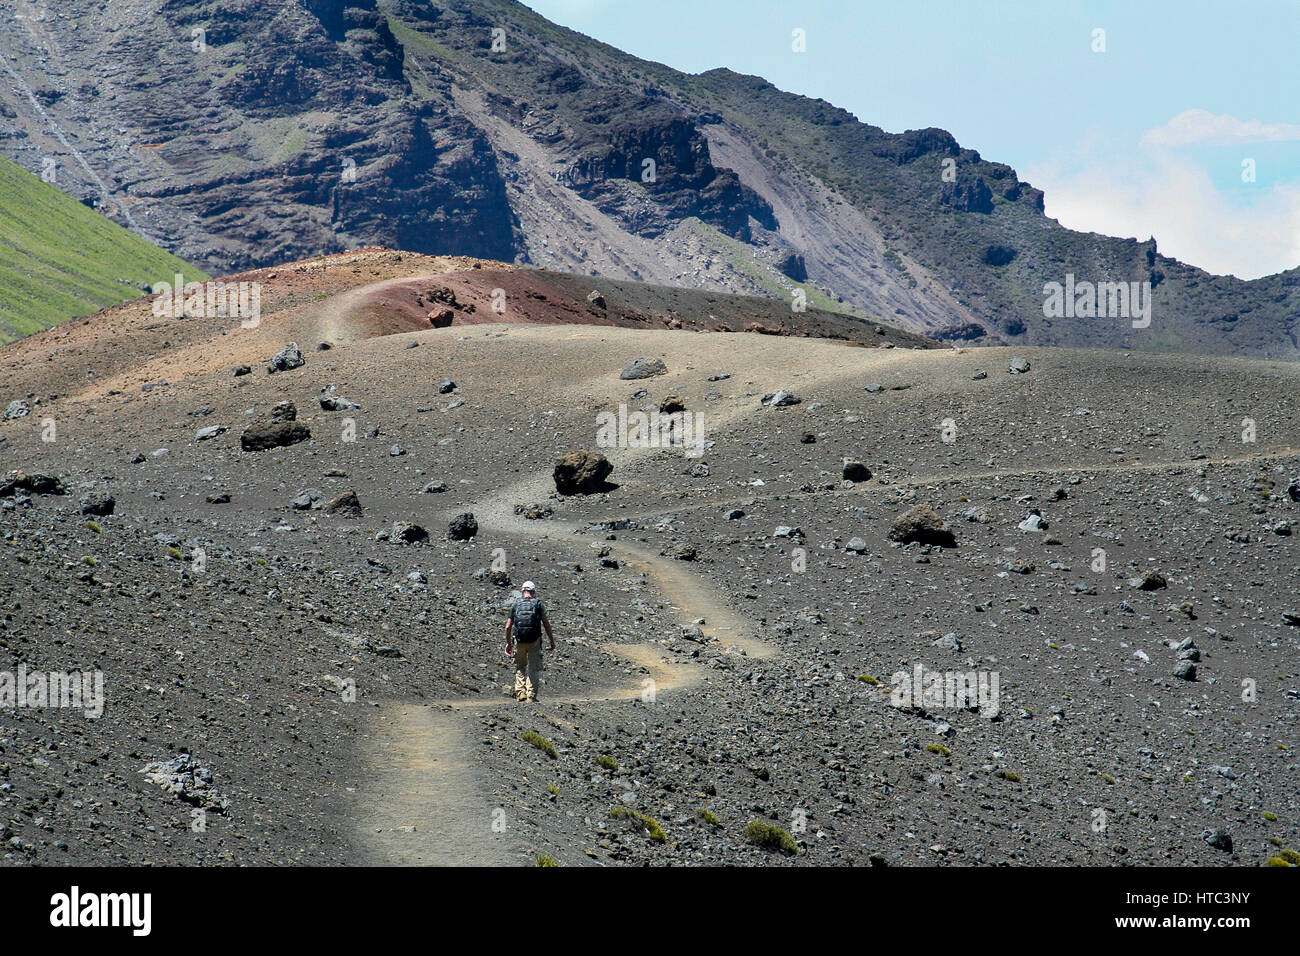 A man walks along a trail in Haleakalā towards a crater. Stock Photo